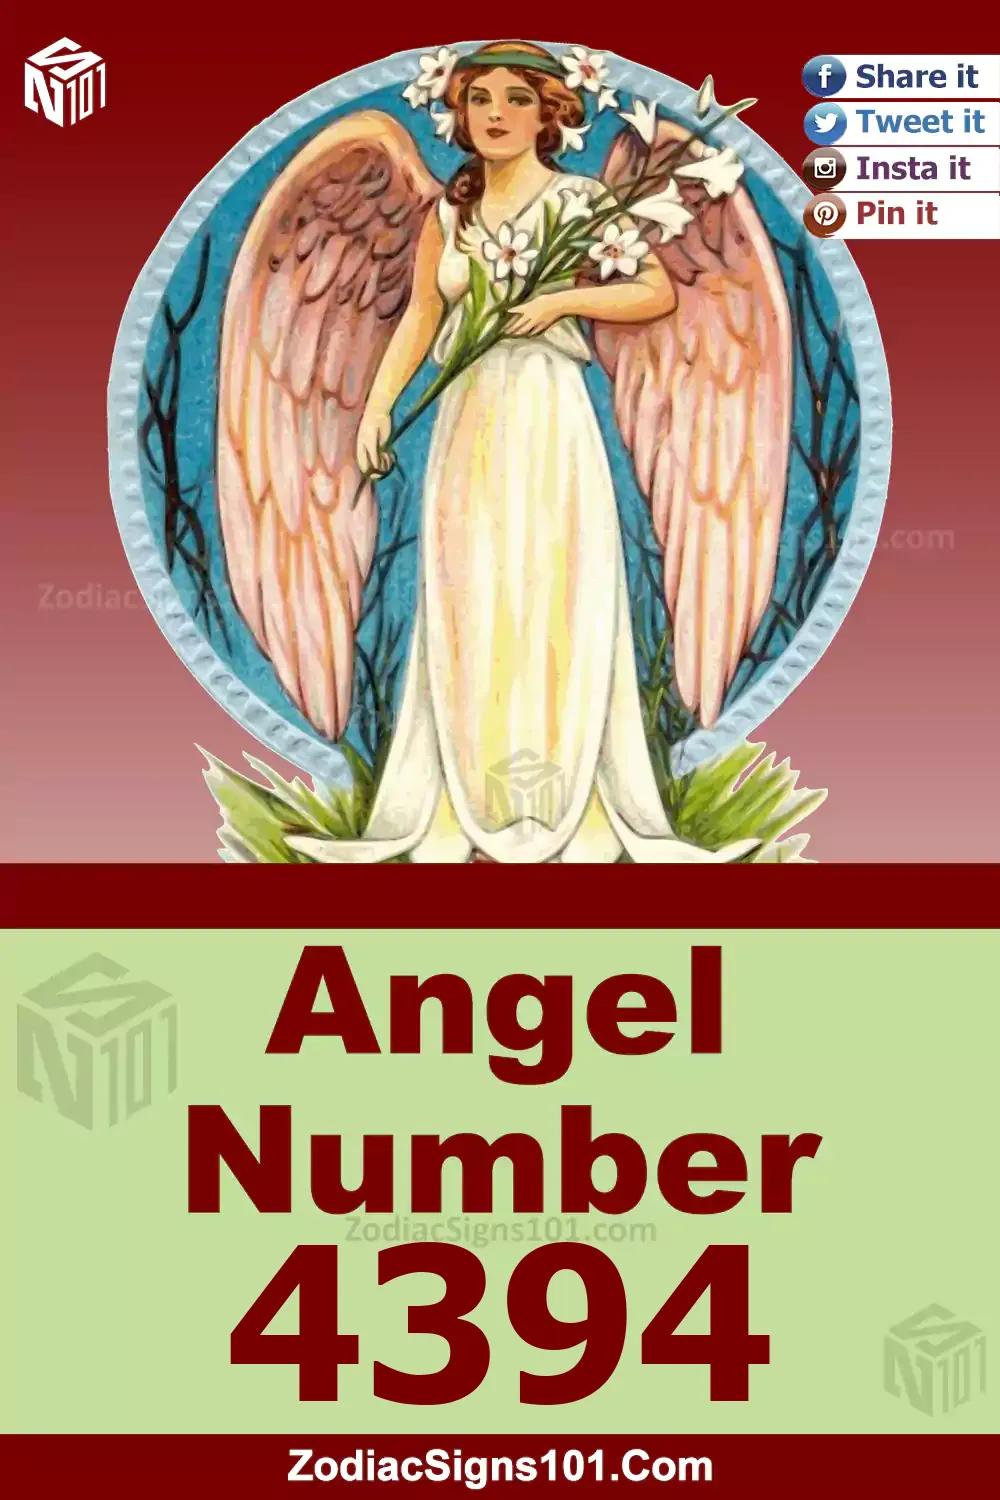 4394-Angel-Number-Meaning.jpg